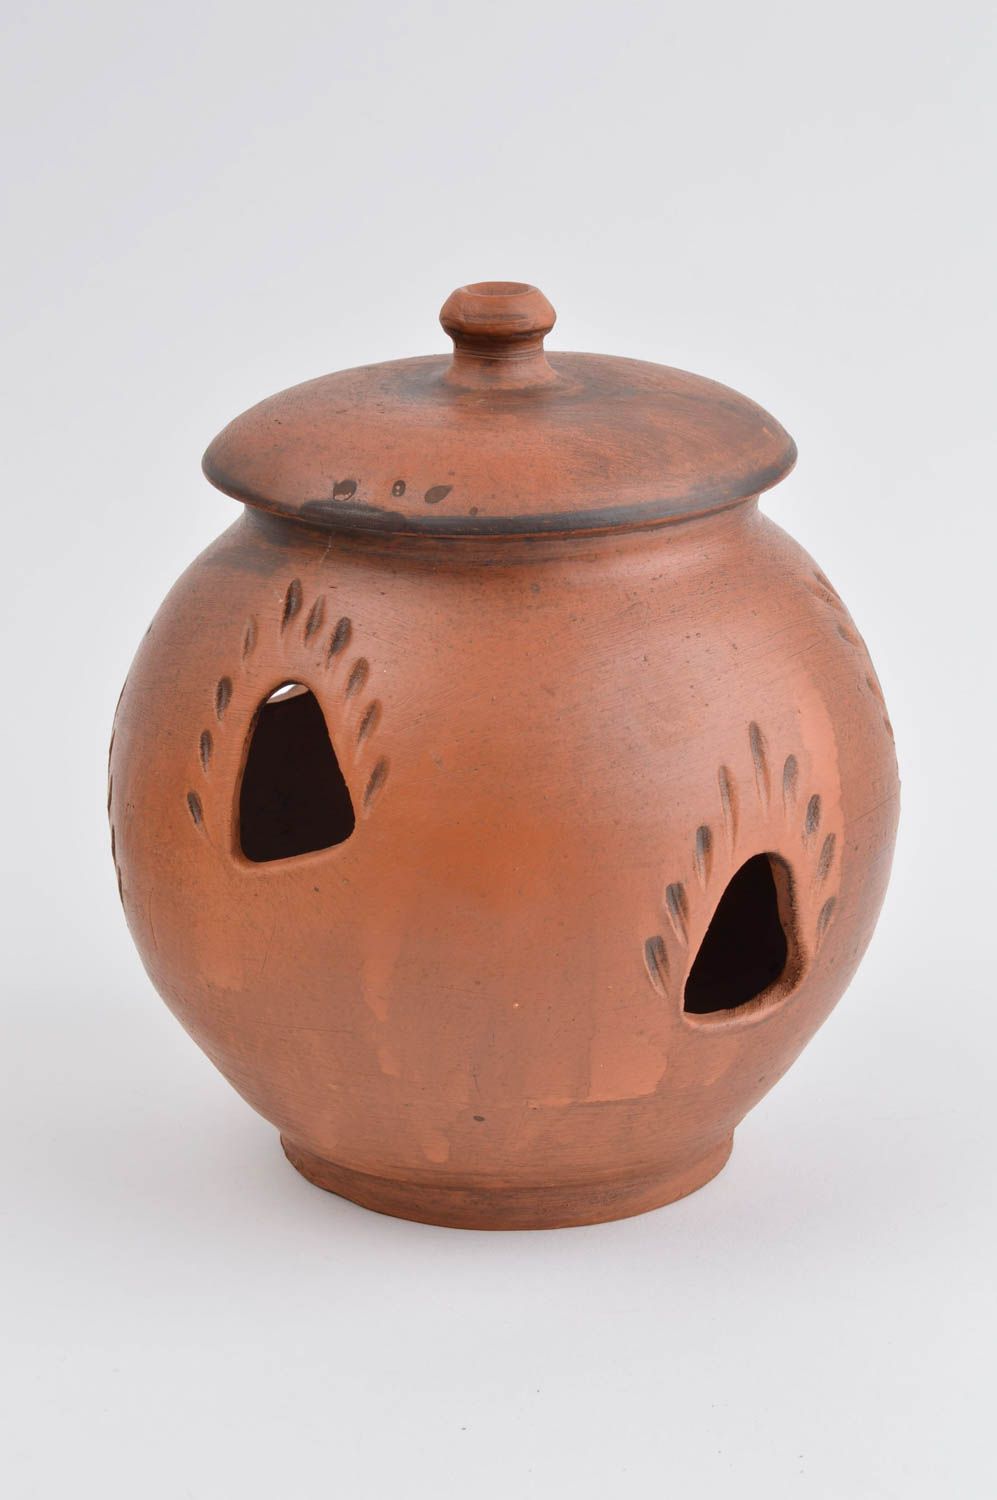 Unusual handmade ceramic pot home goods tableware ideas kitchen supplies photo 2